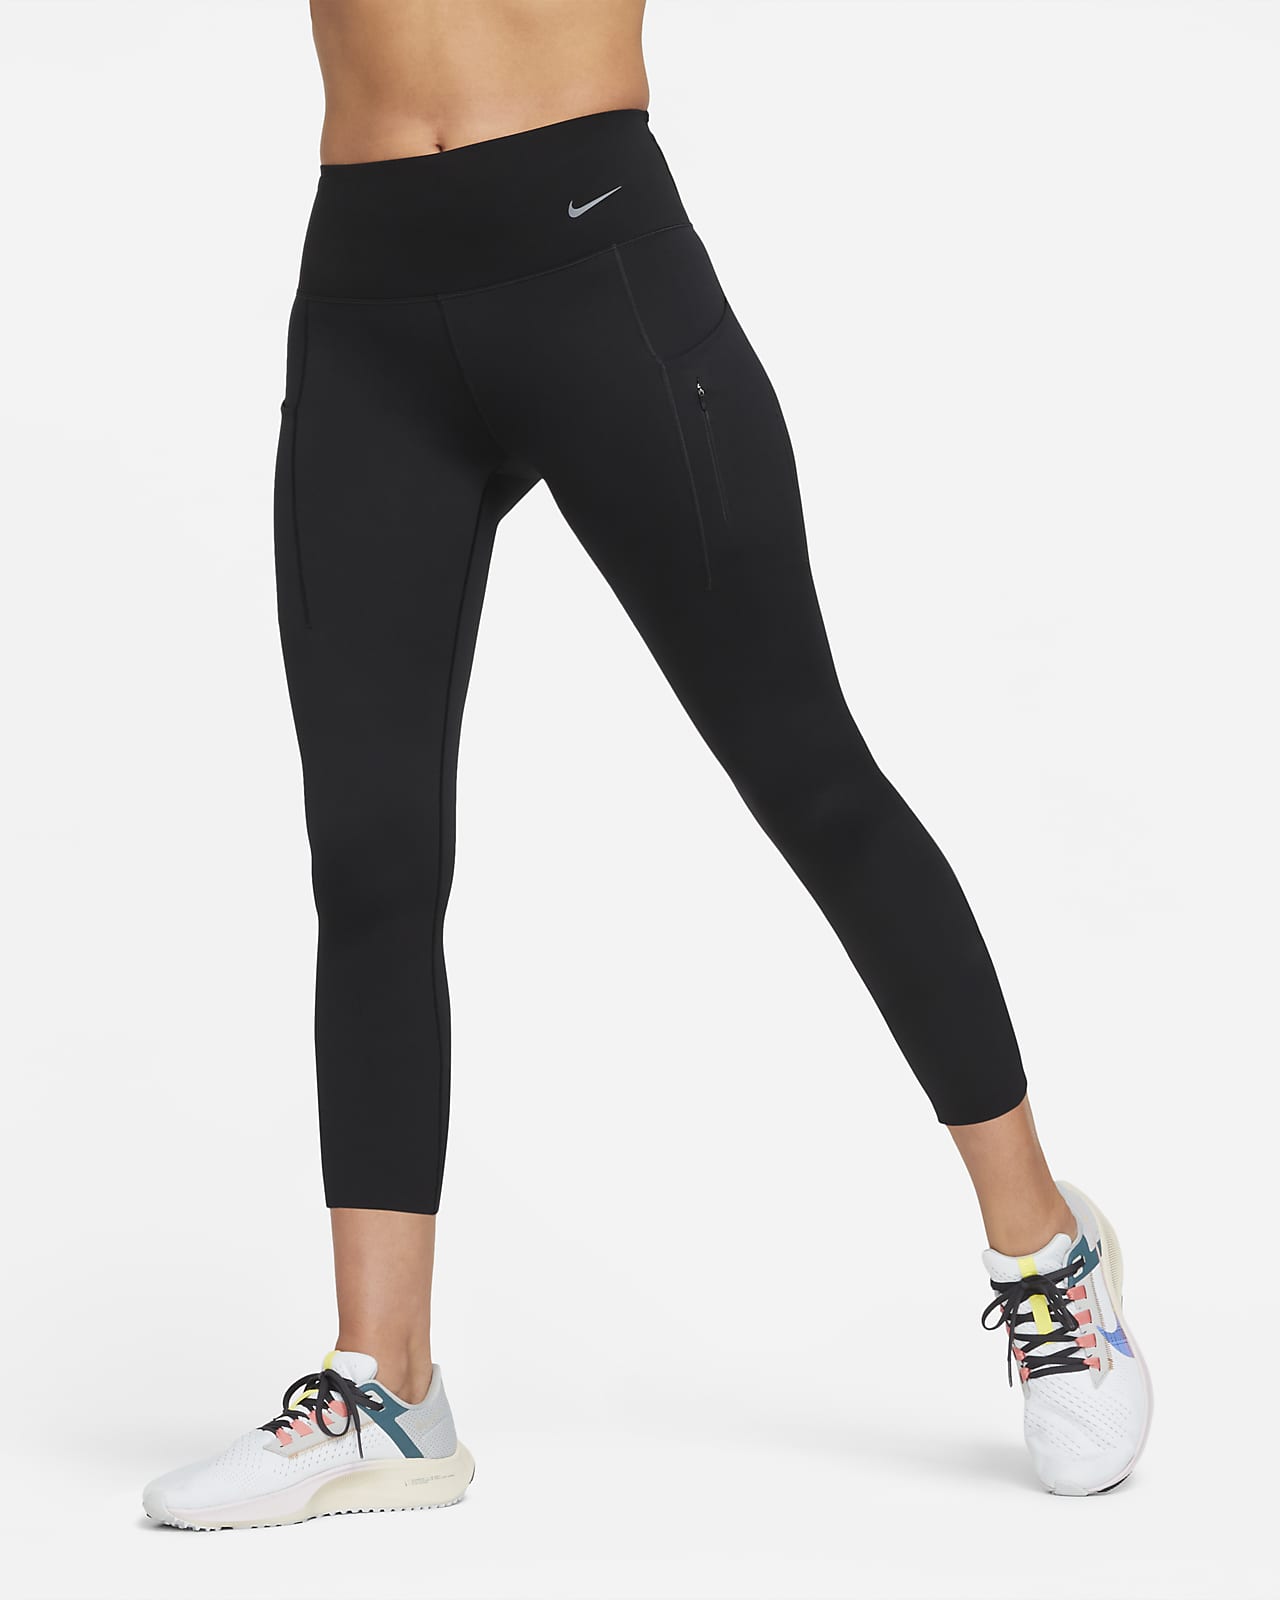 Go Tights & Leggings. Nike CA